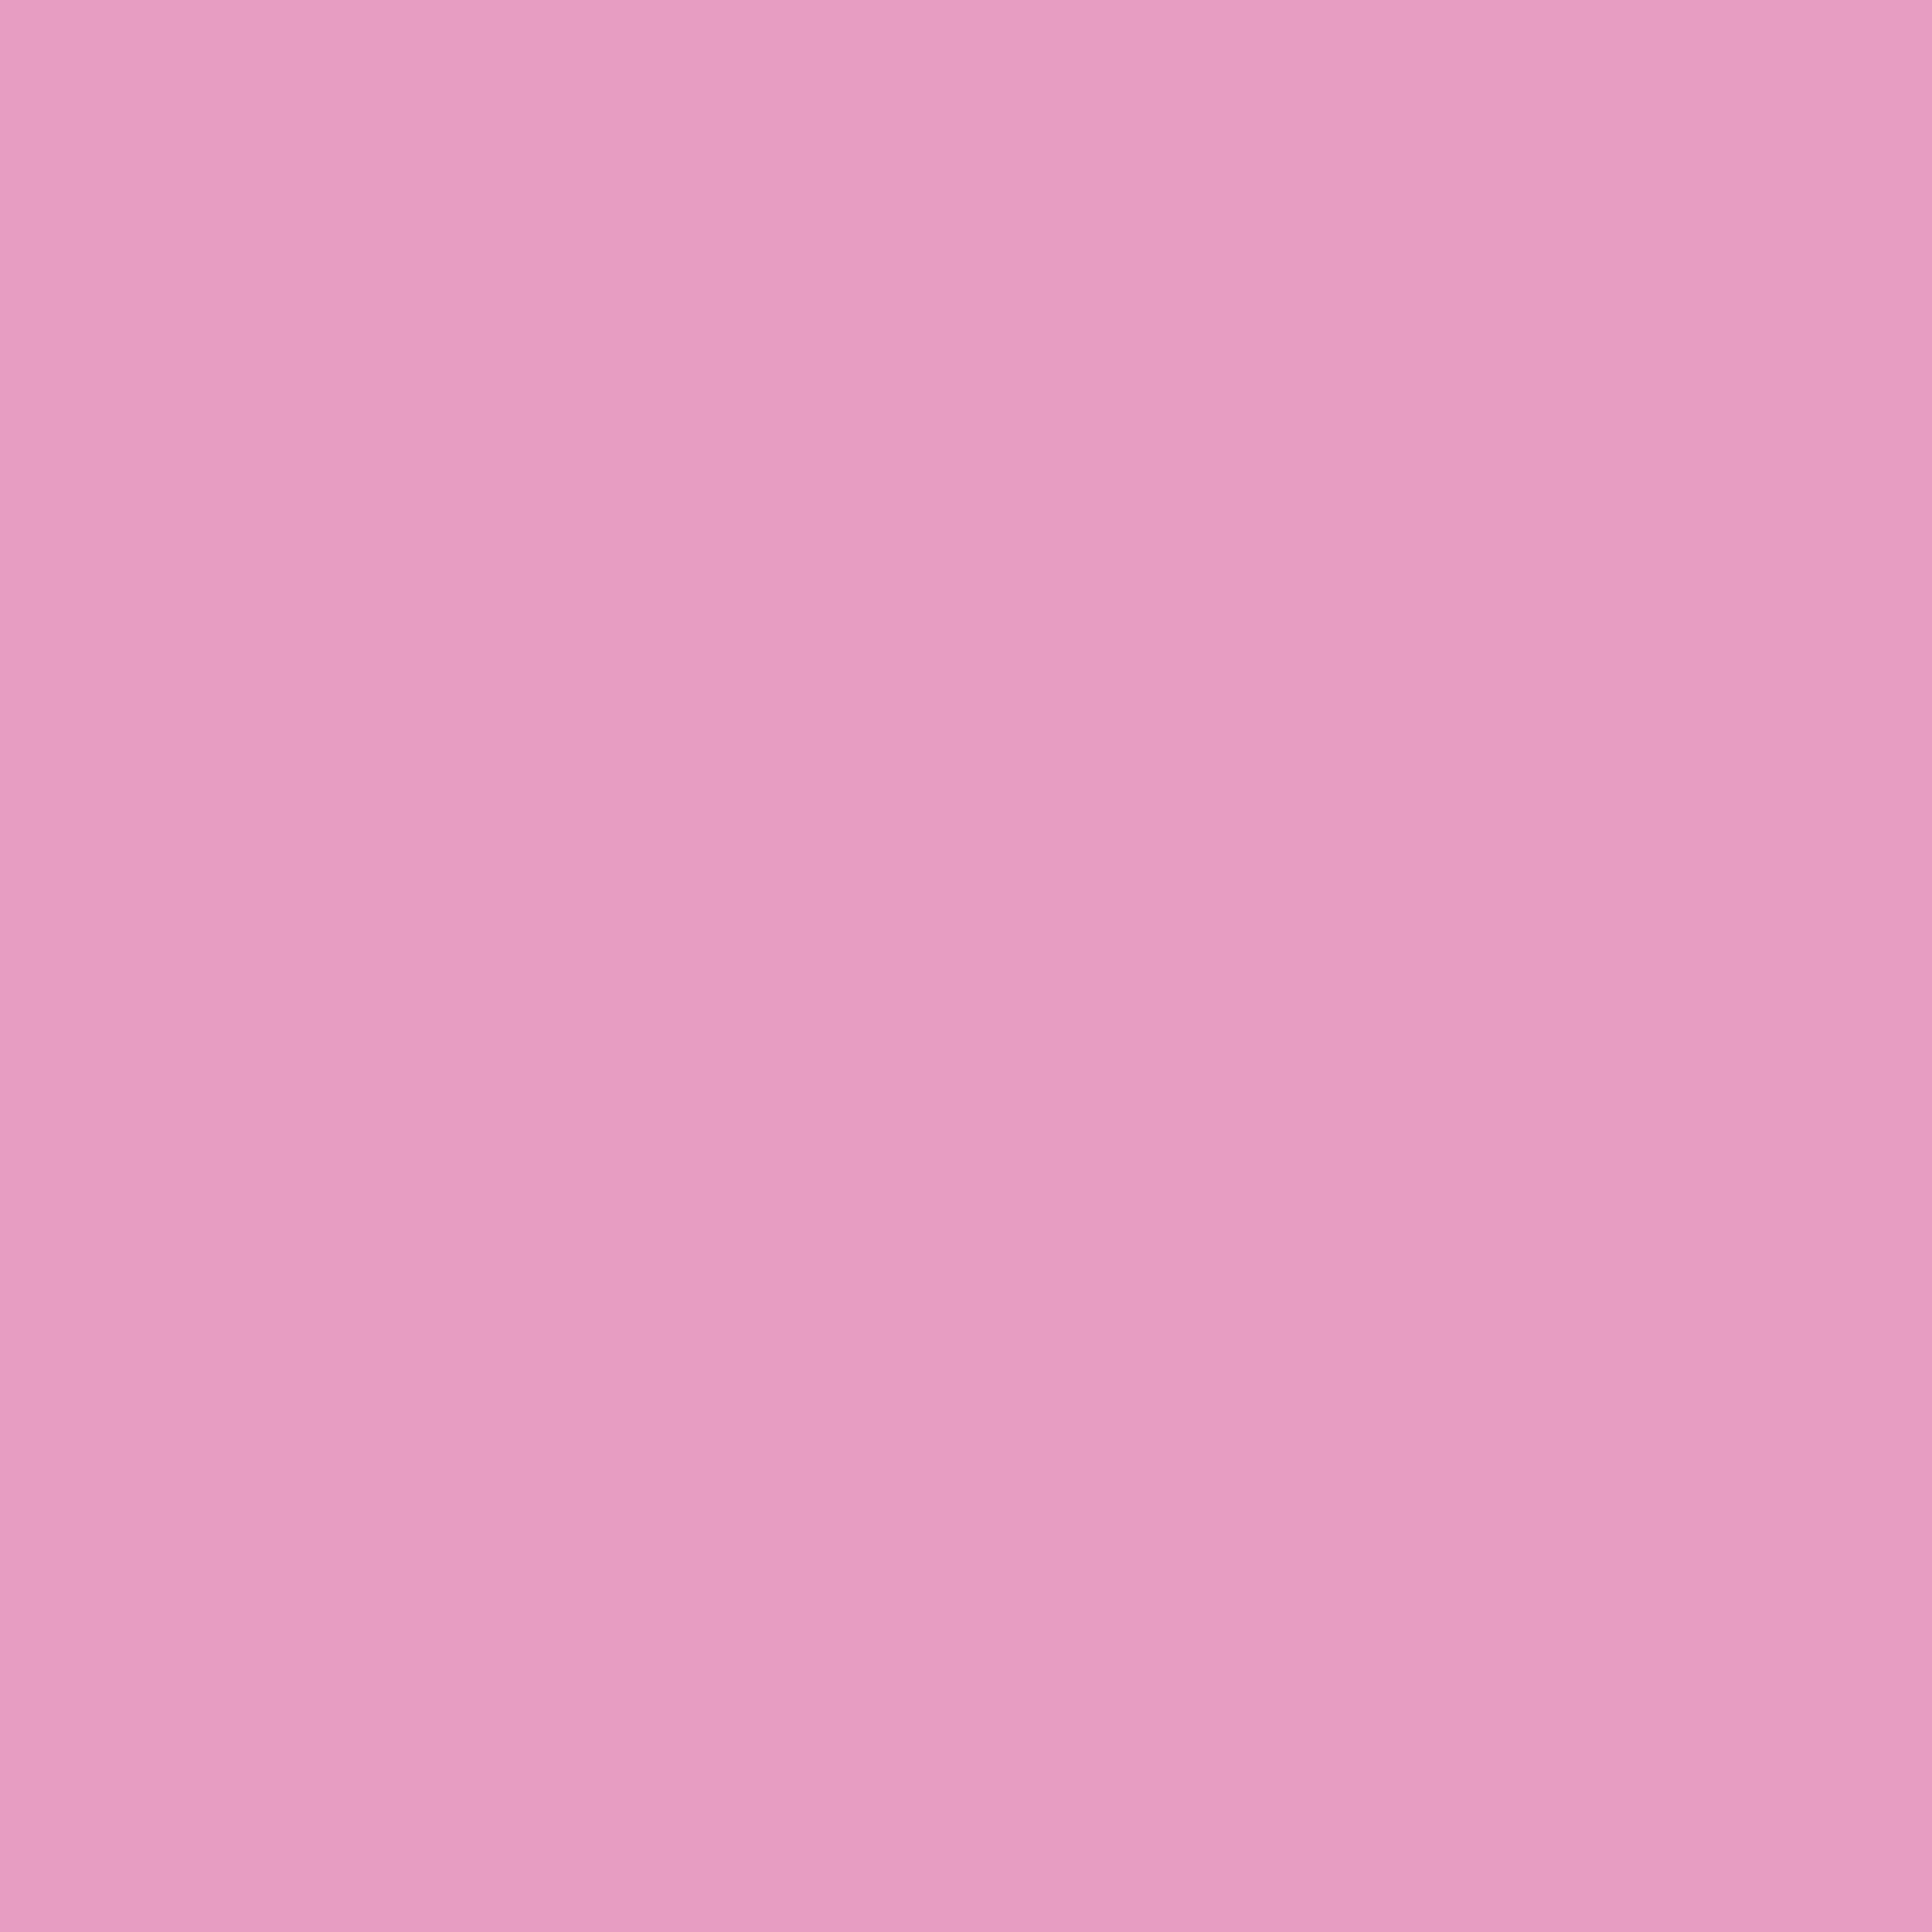 NEW YORK YANKEES Girls' Pink Jersey - Bob's Stores